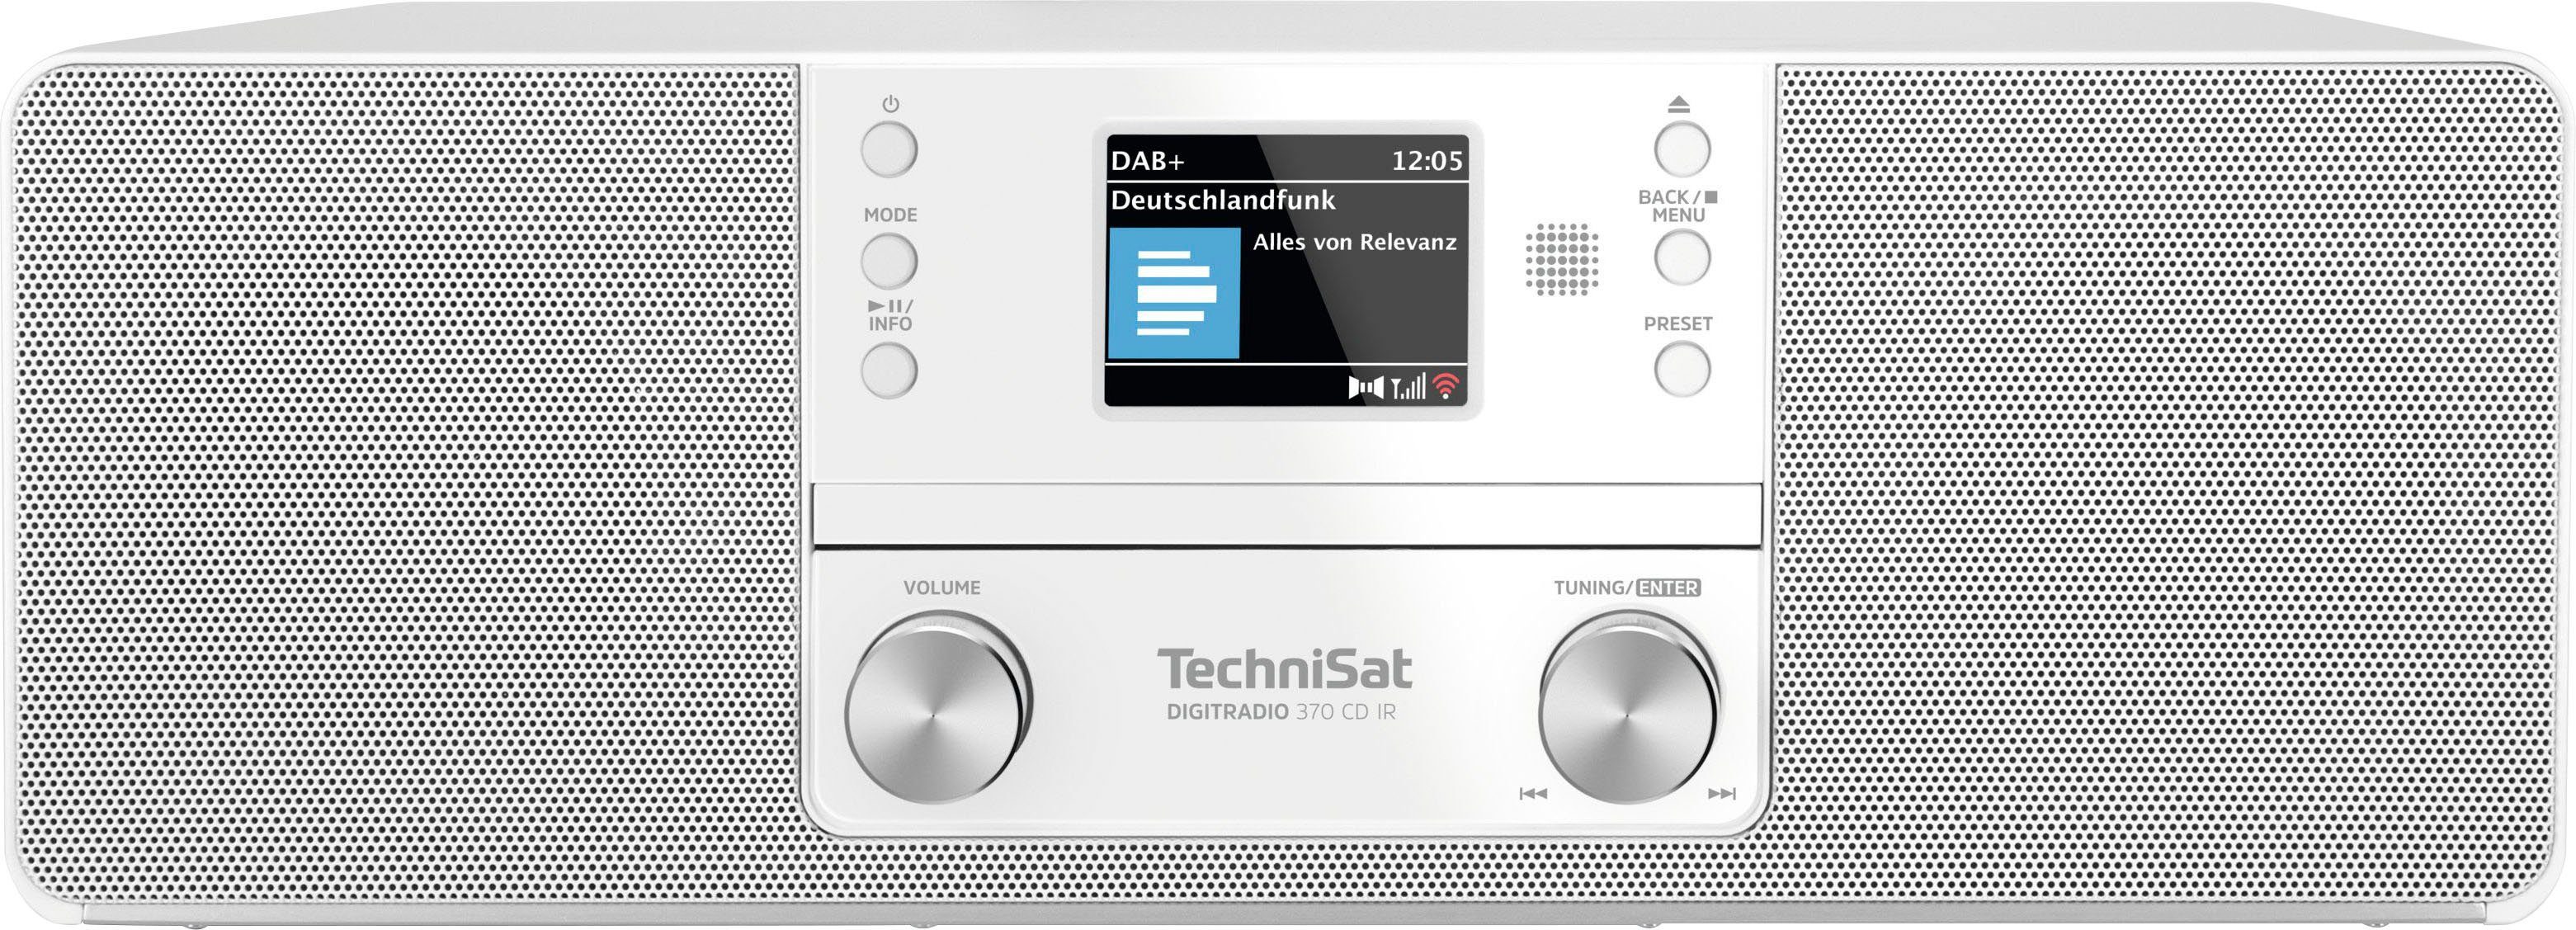 IR DIGITRADIO W) CD TechniSat weiß 370 10 Digitalradio UKW (DAB) RDS, (Digitalradio (DAB), mit